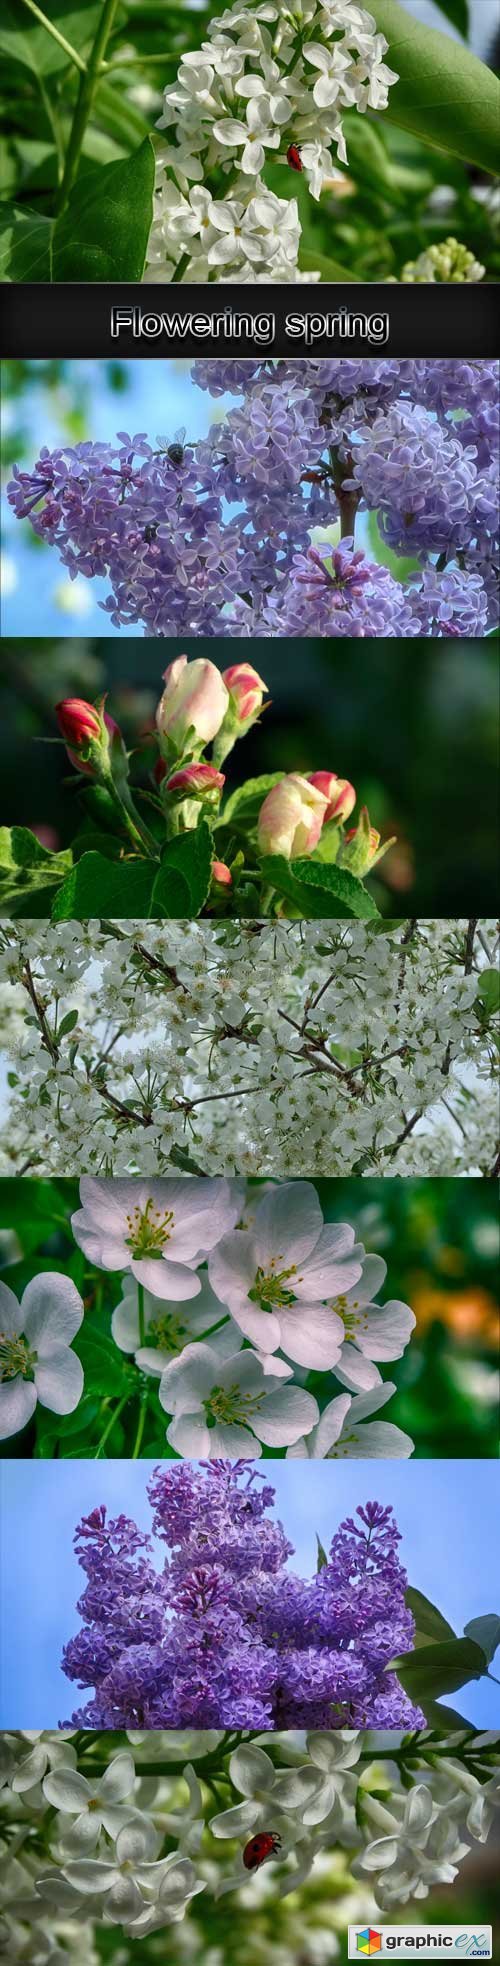 Flowering spring raster graphics